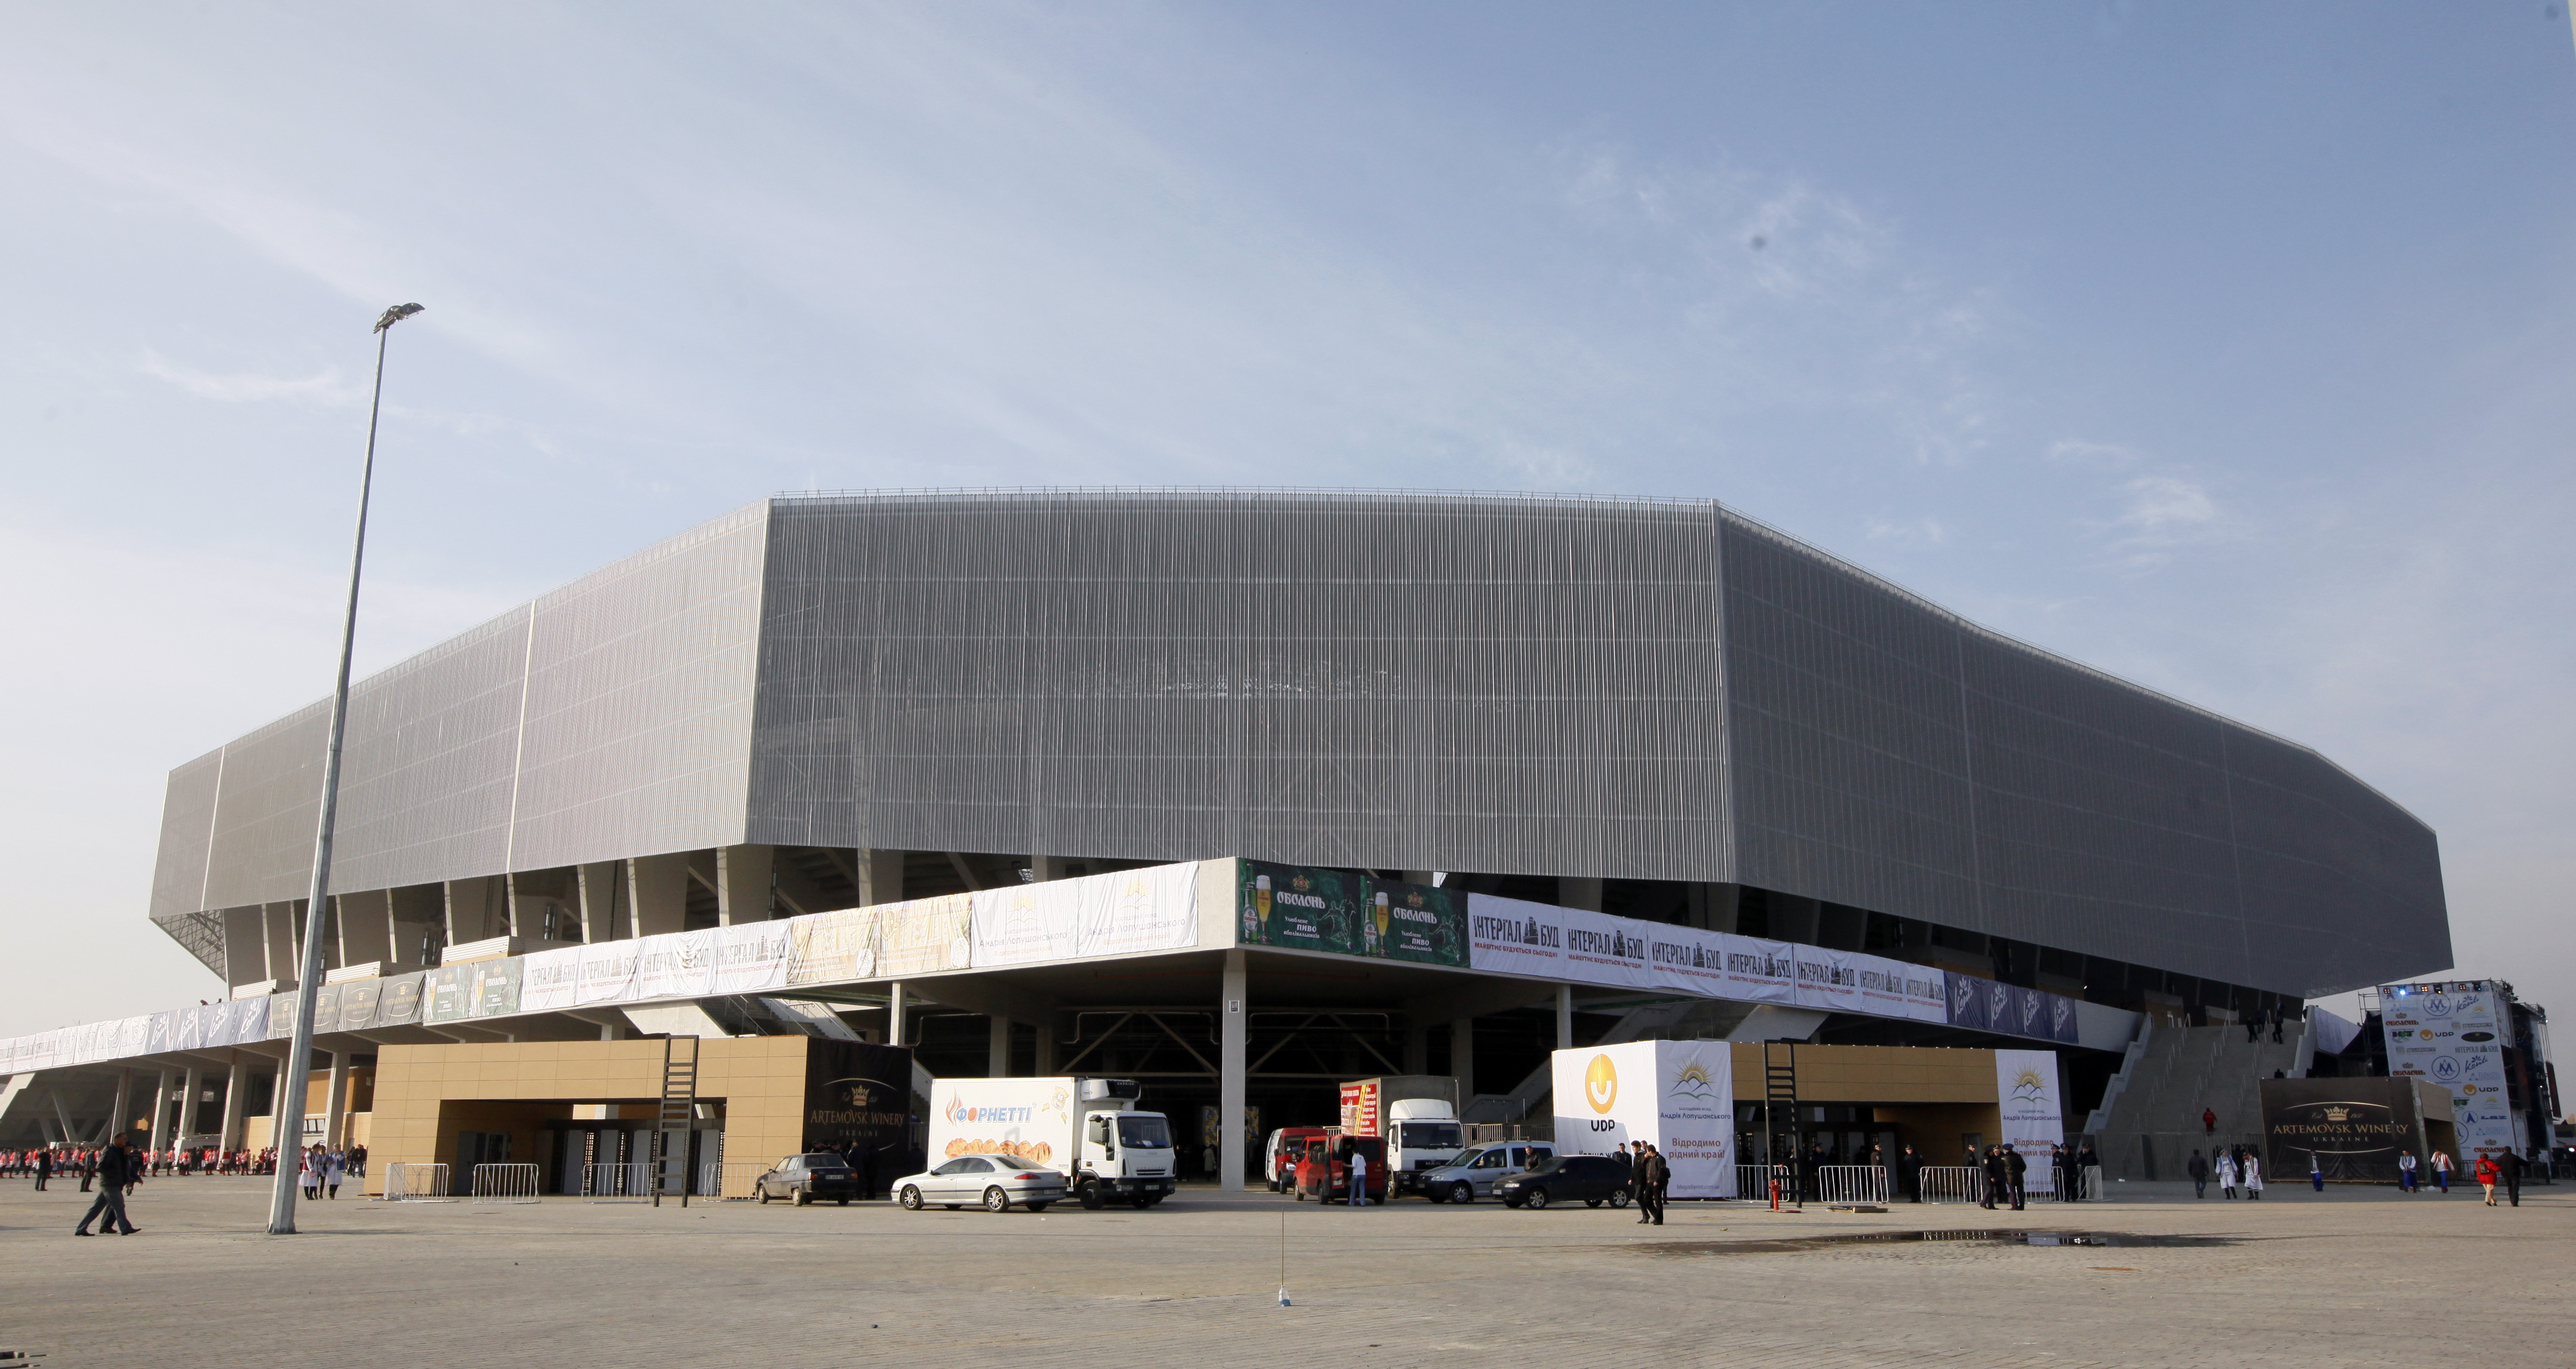 Arena Lviv, Lviv. Kapacitet: 30 000. Invigdes: oktober 2011. Matcher: 3.